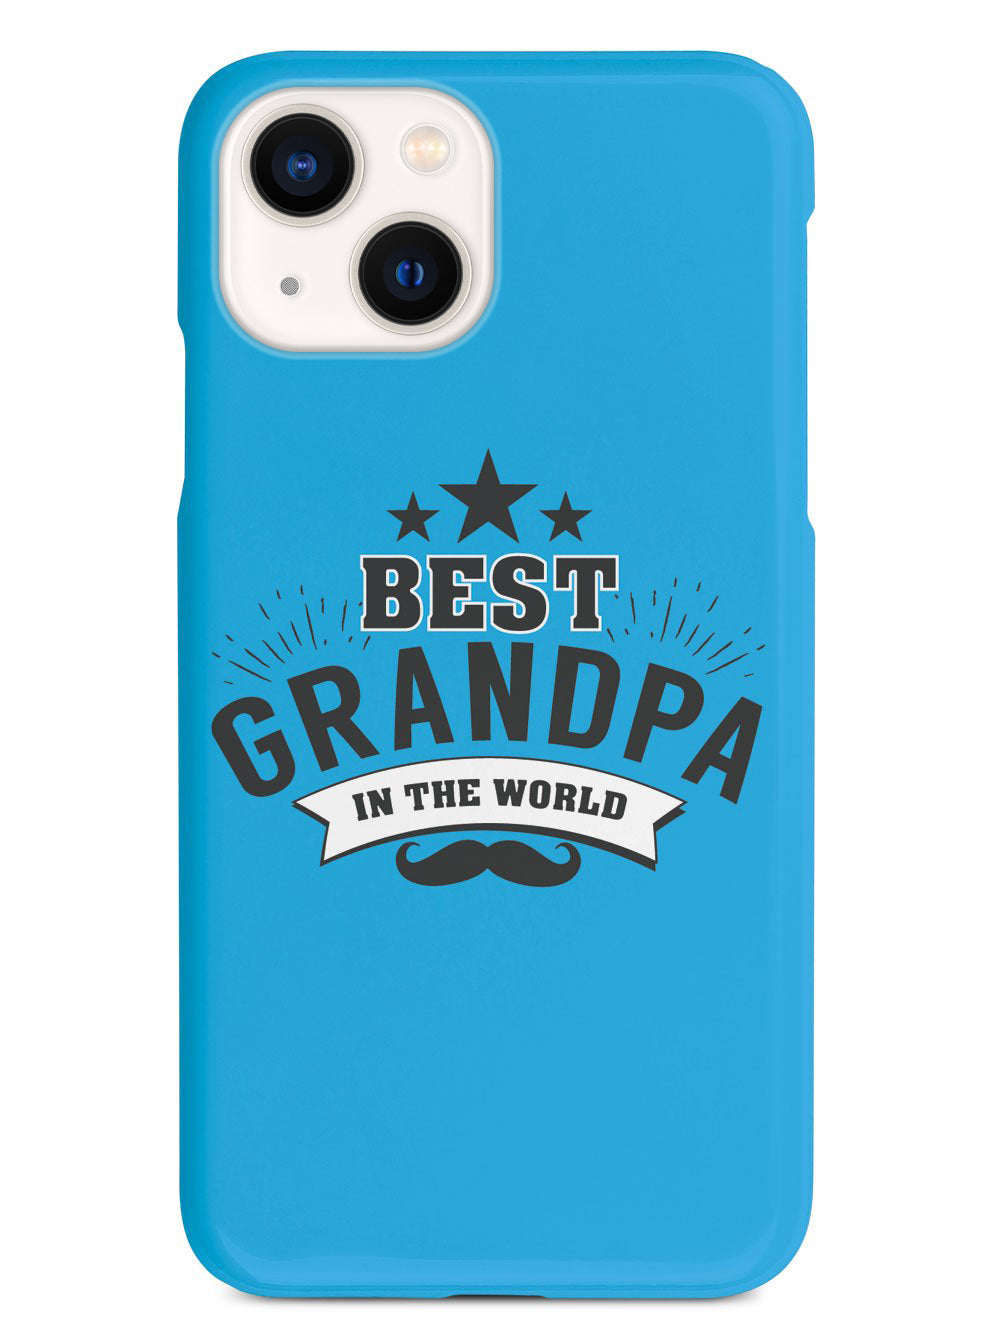 Best Grandpa In The World - White Case